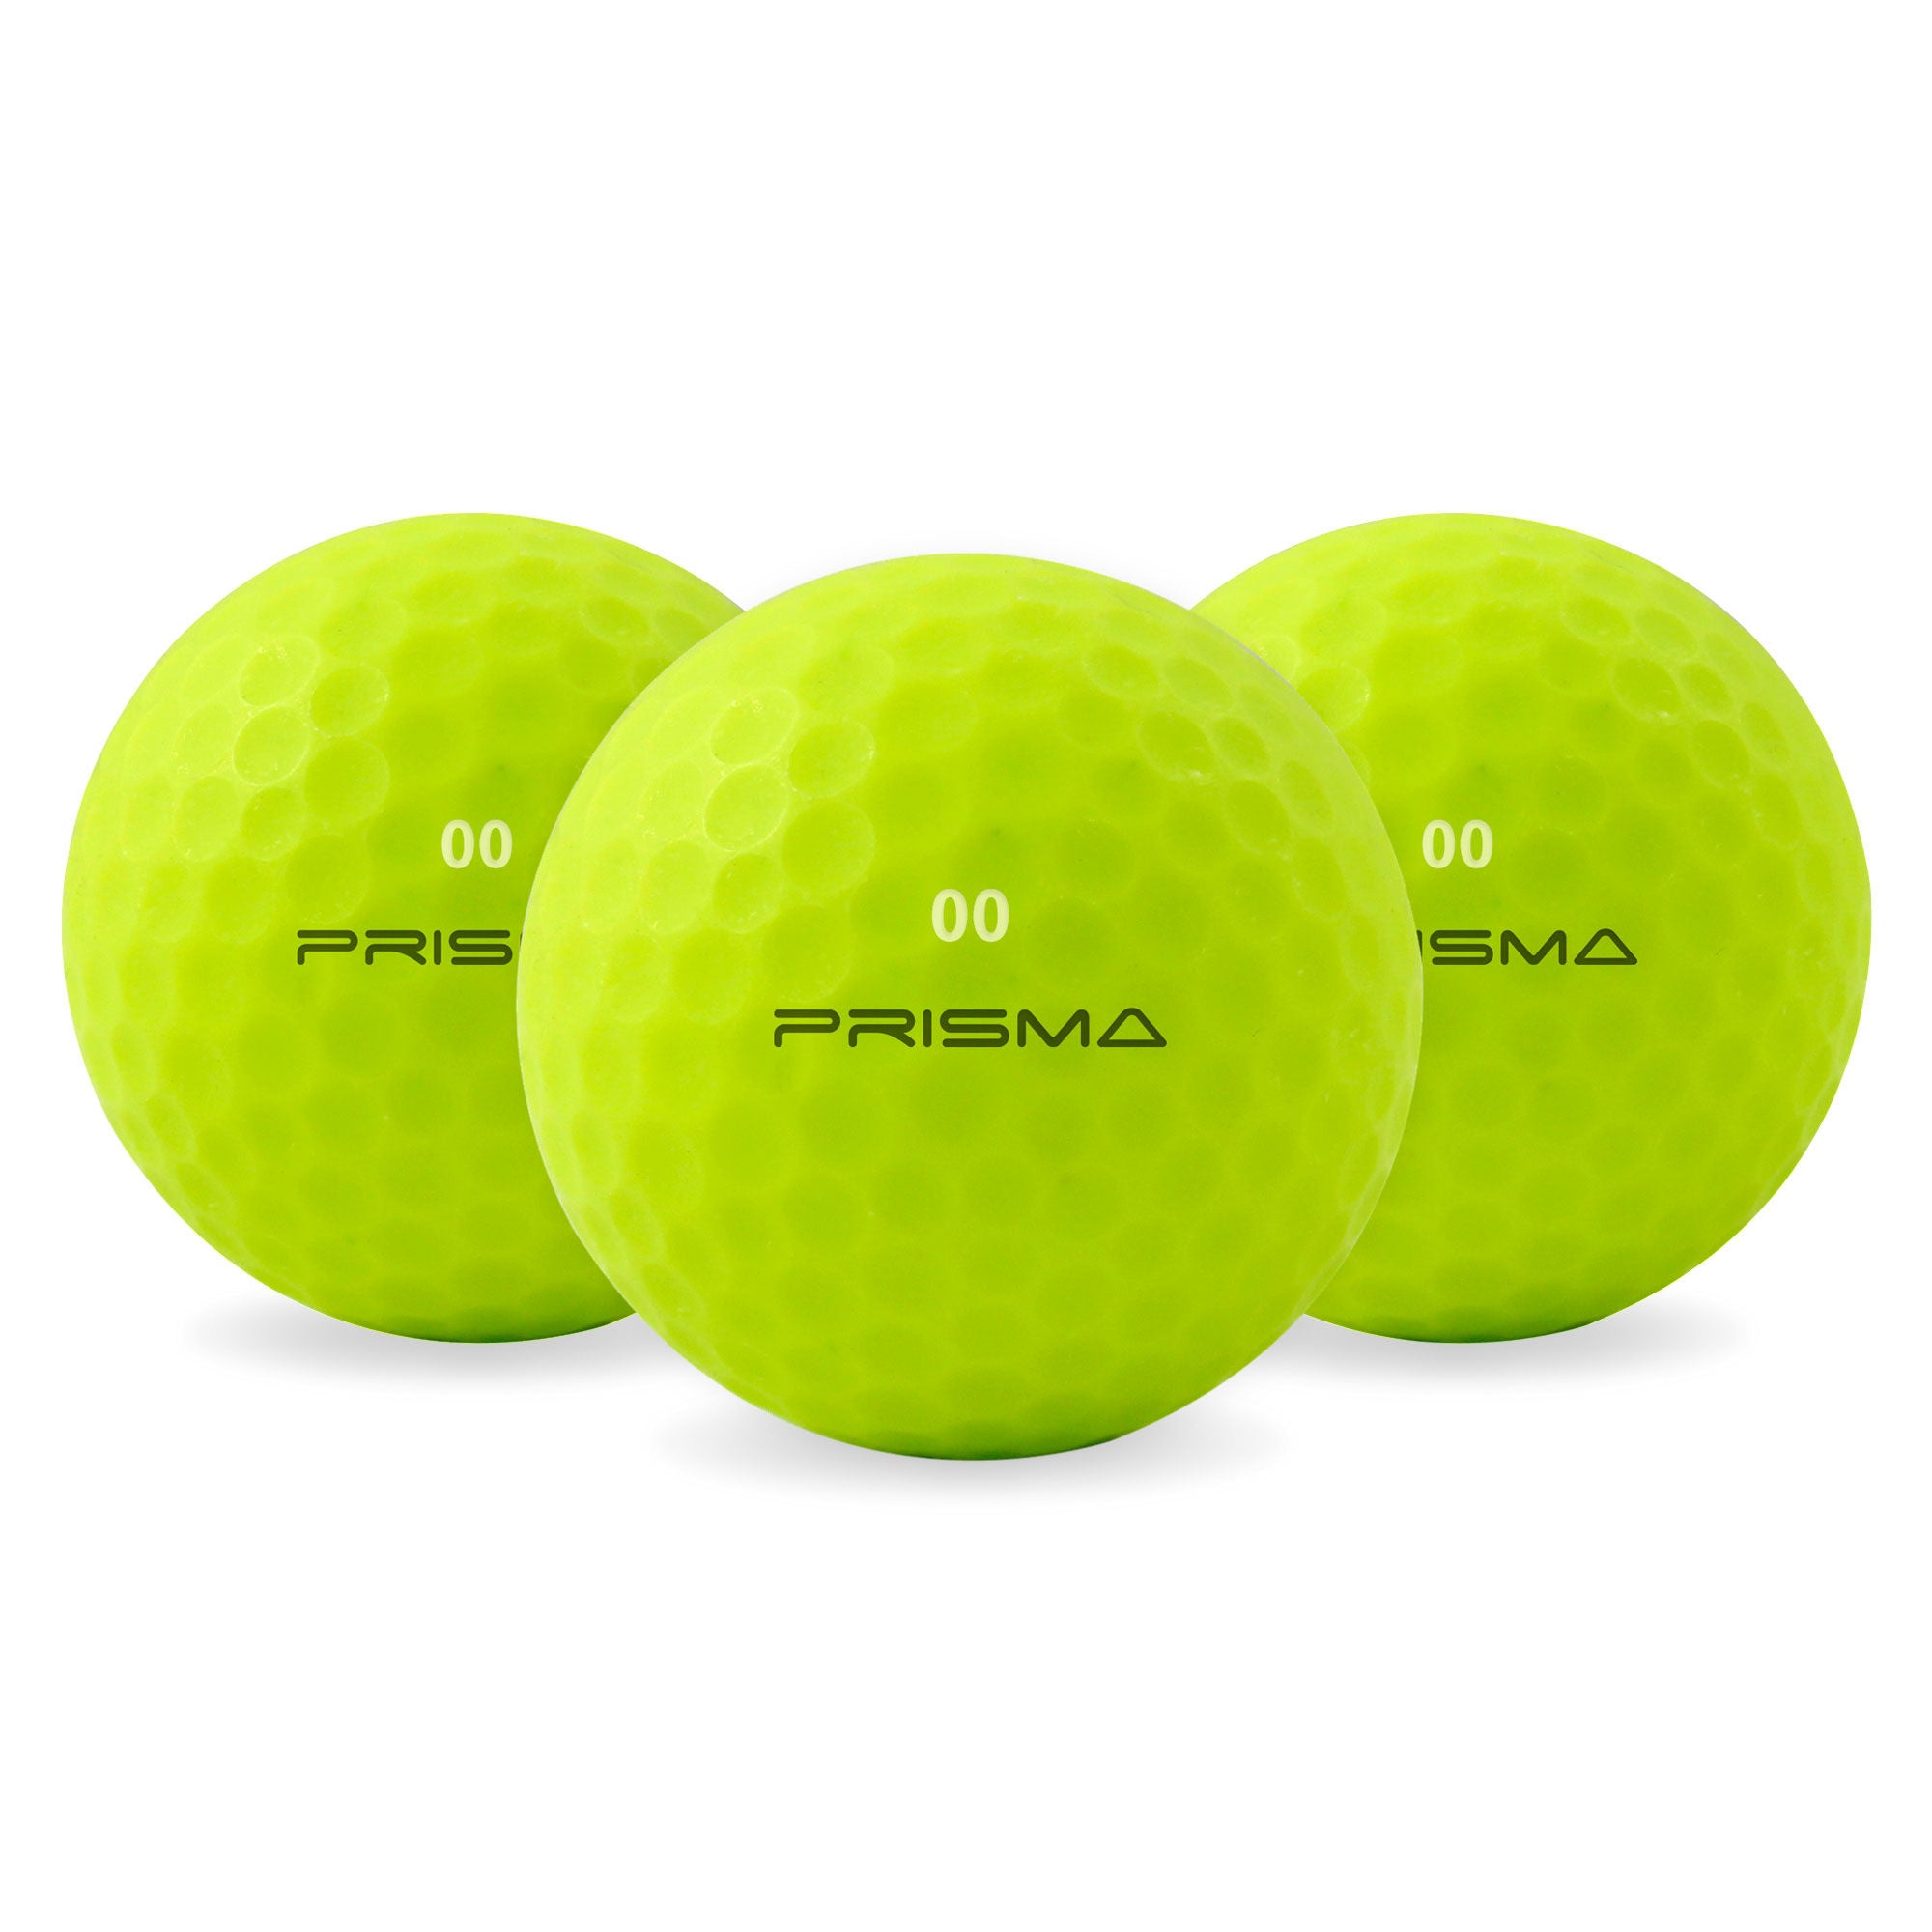 Prisma Fluoro Matt TI Golf Balls Bag 12 - Event Stuff Ltd Owns Putterfingers.com!